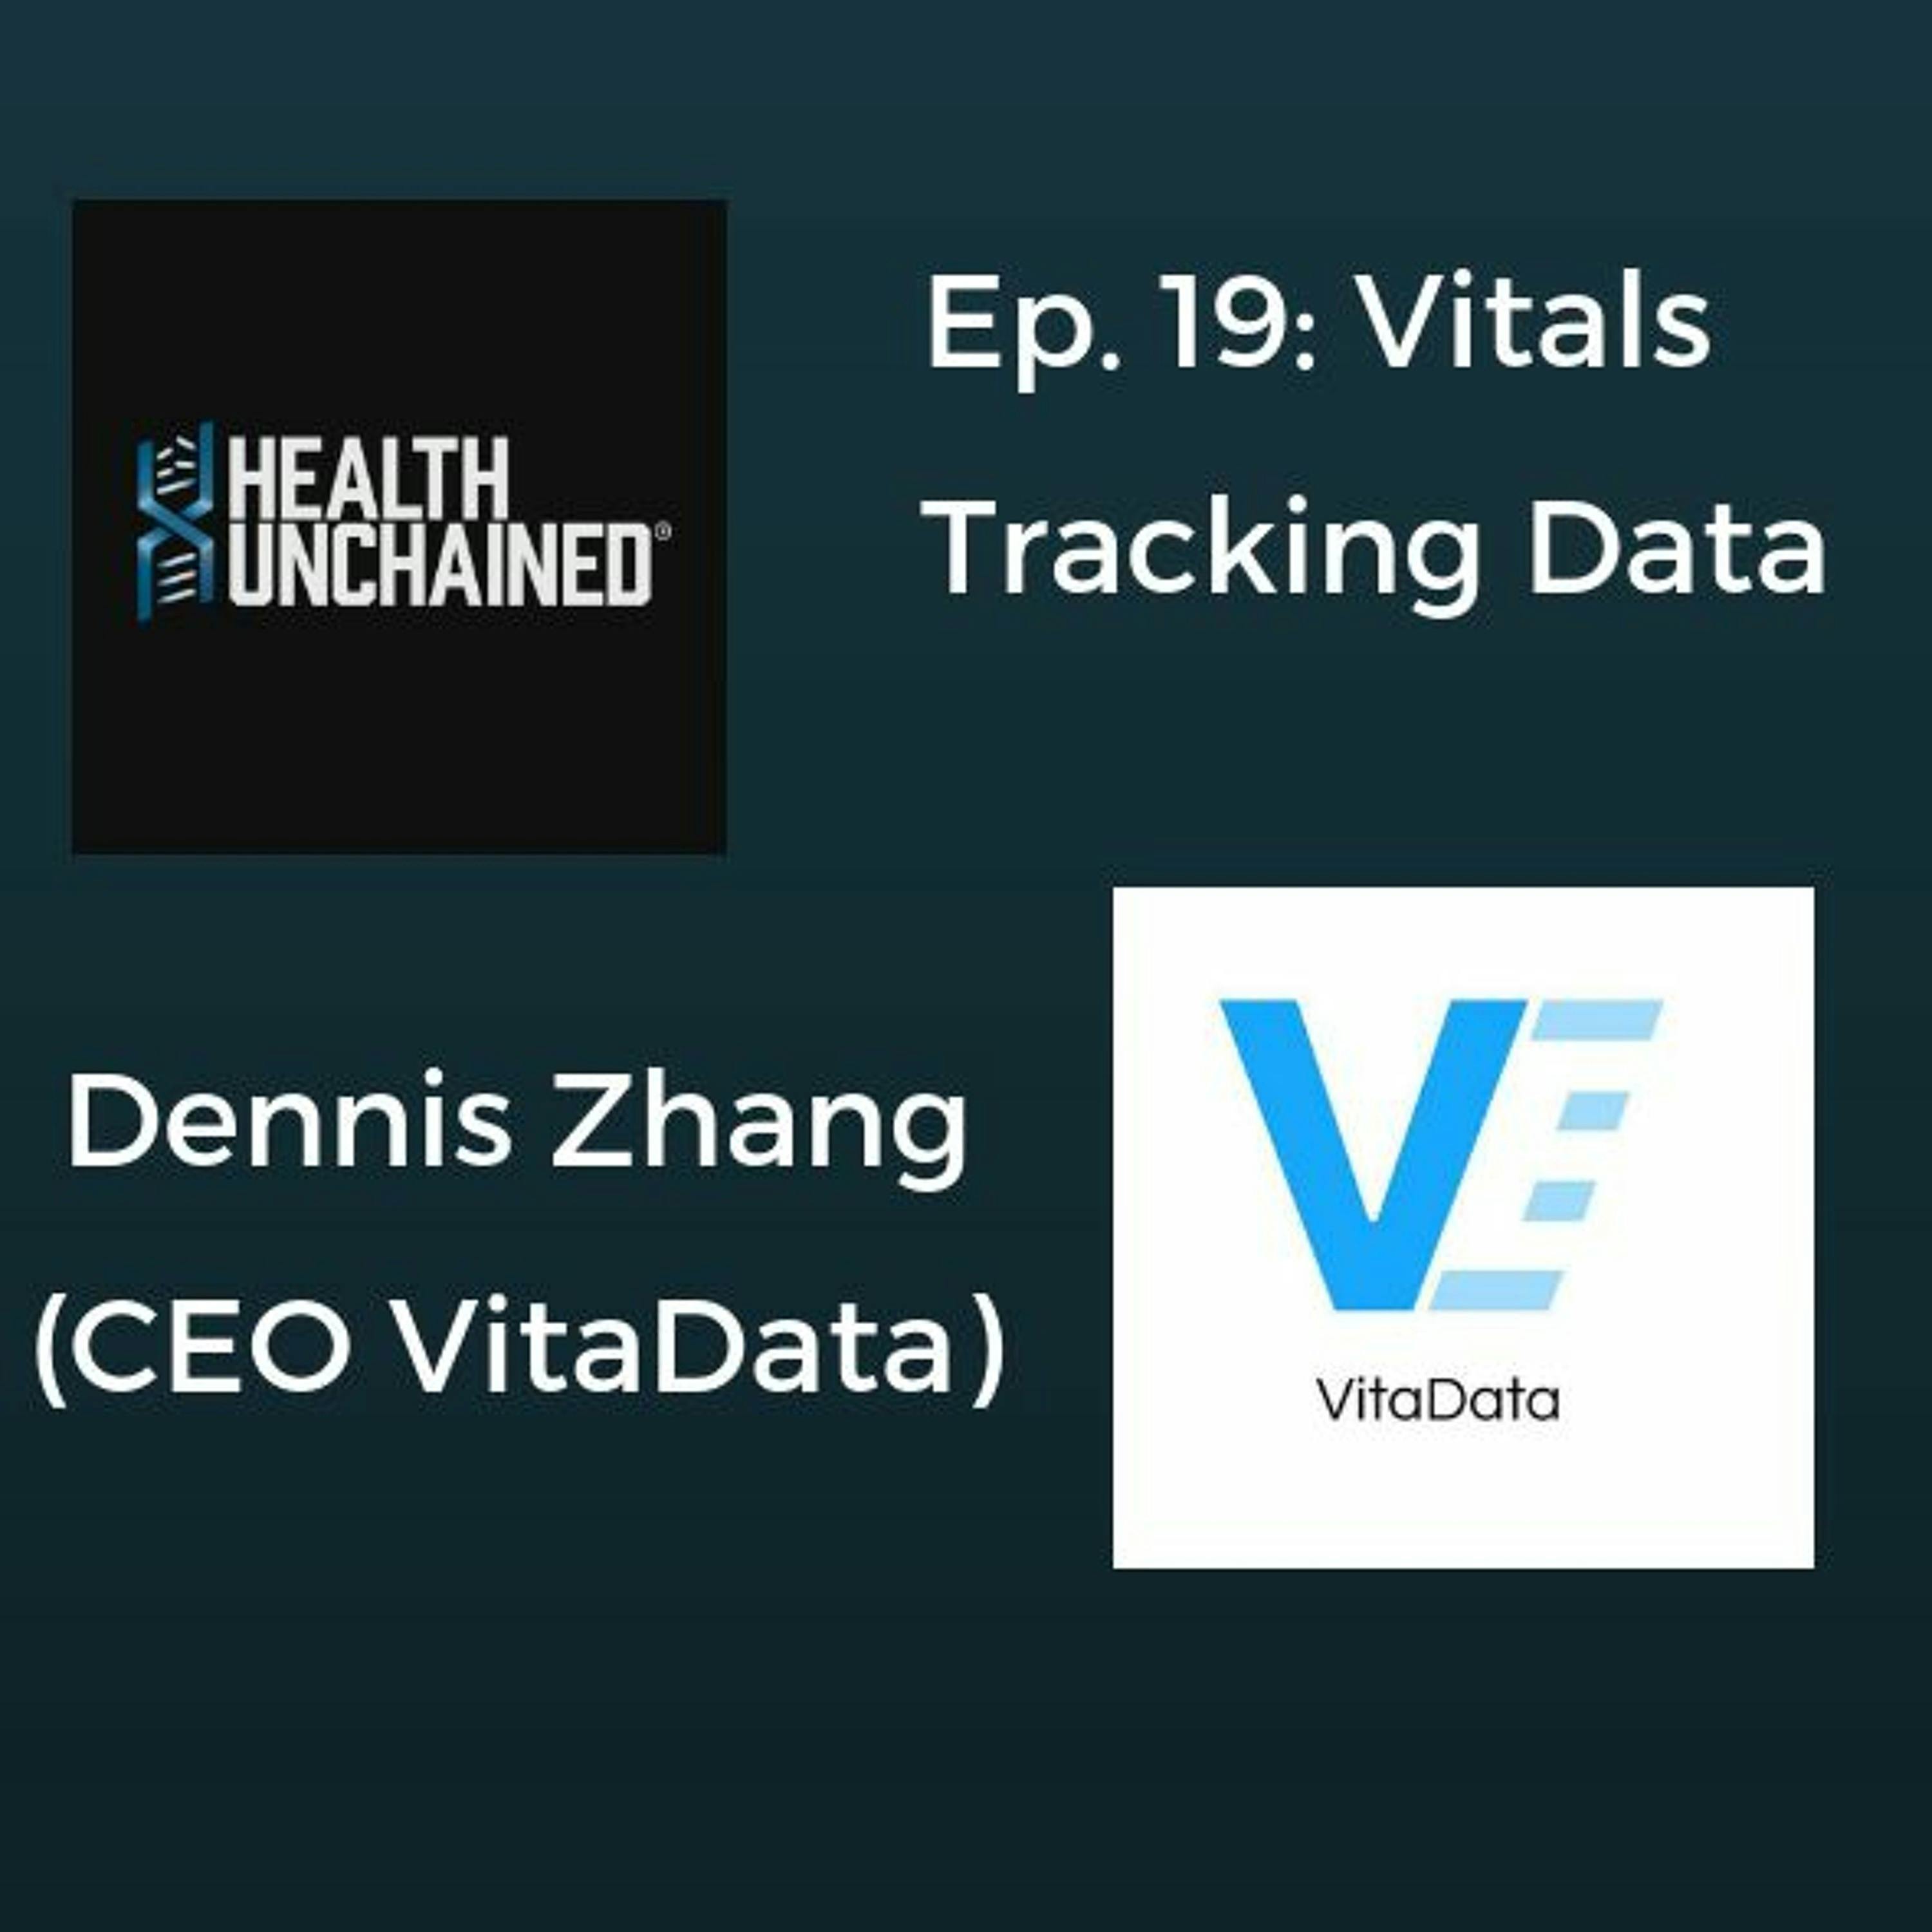 Ep. 19: Vitals Tracking Data – Dennis Zhang (CEO VitaData)